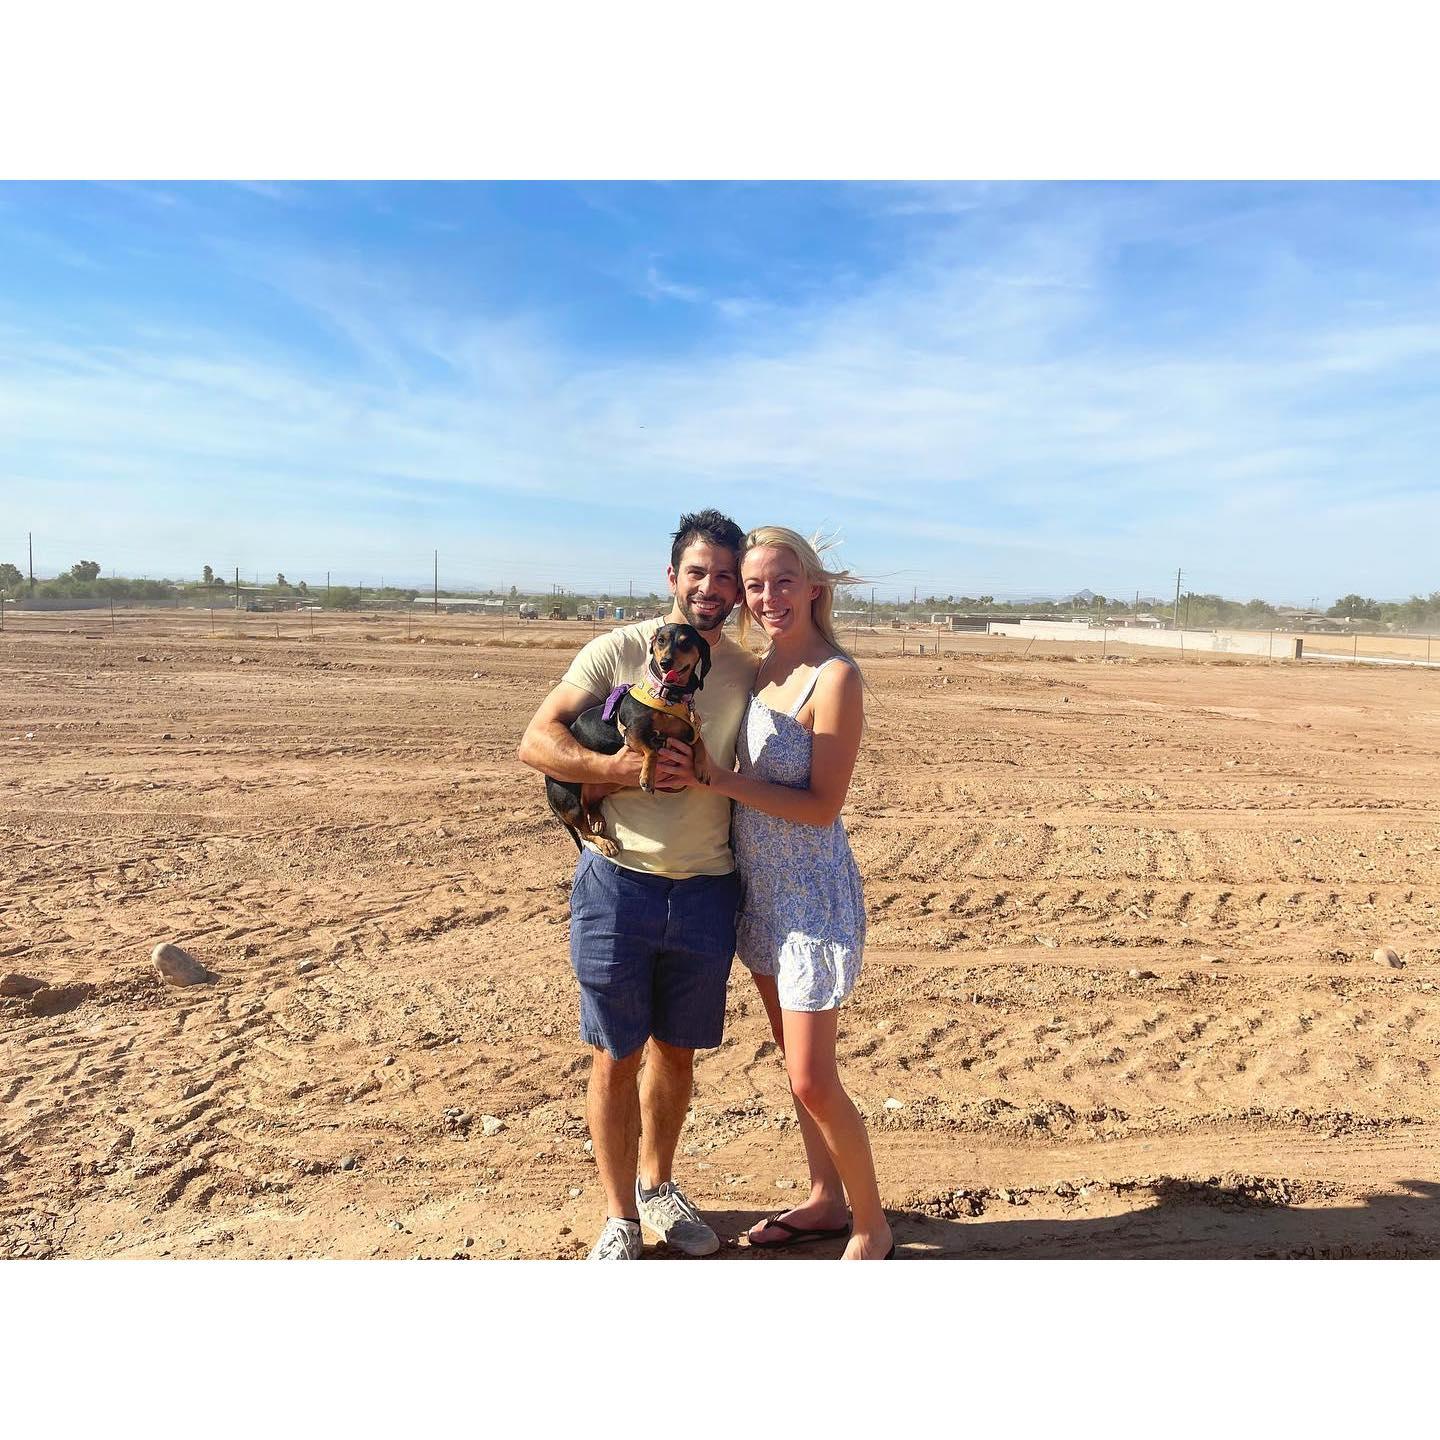 We bought some dirt! Phoenix, AZ. May 2022